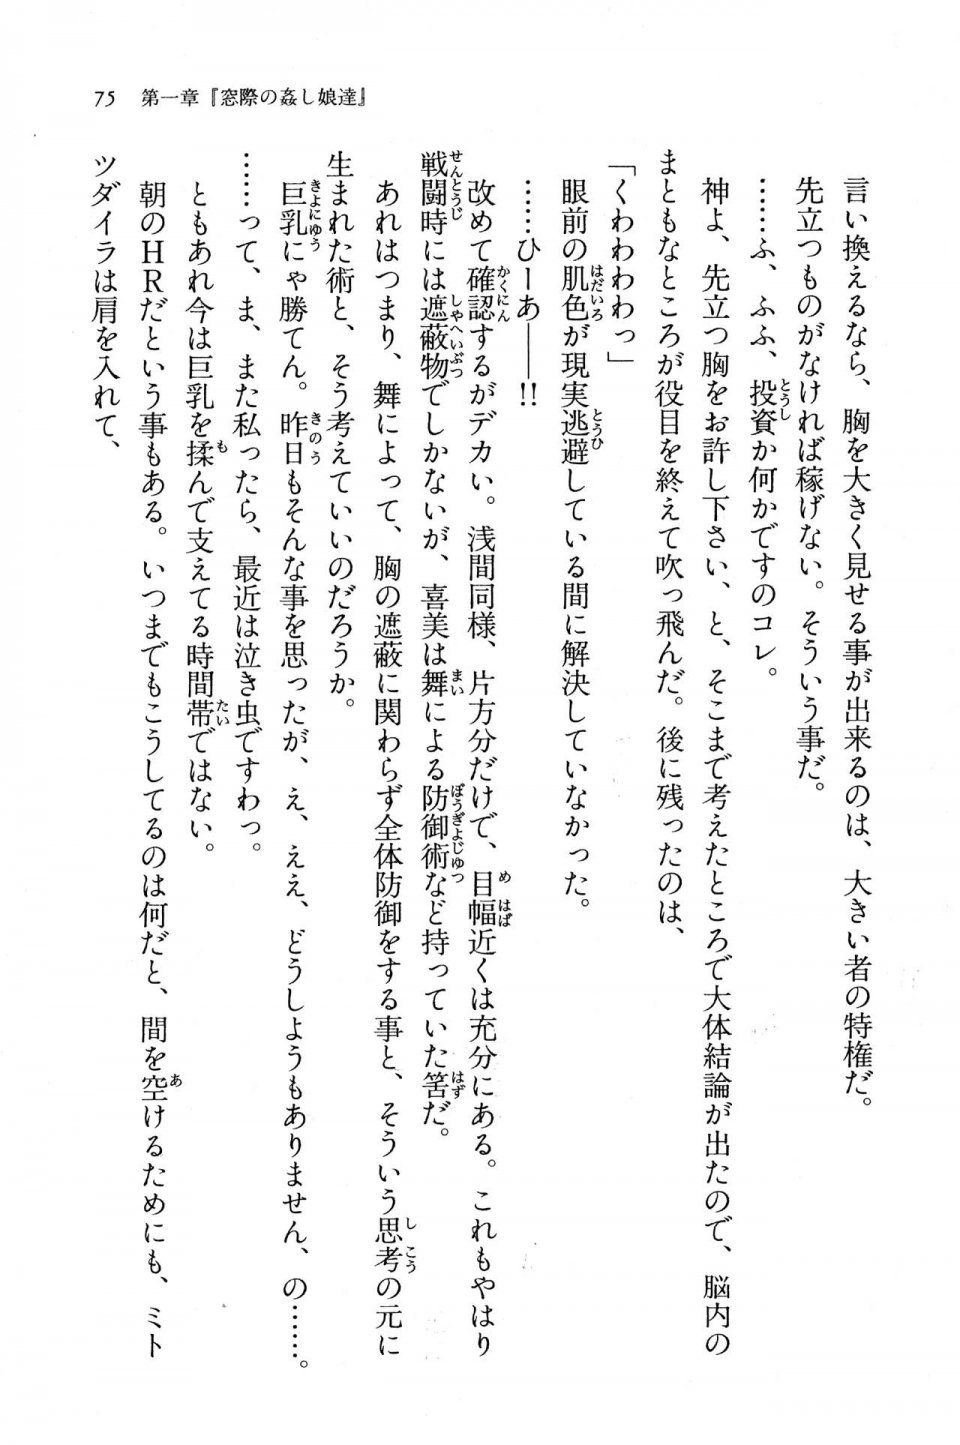 Kyoukai Senjou no Horizon BD Special Mininovel Vol 5(3A) - Photo #79